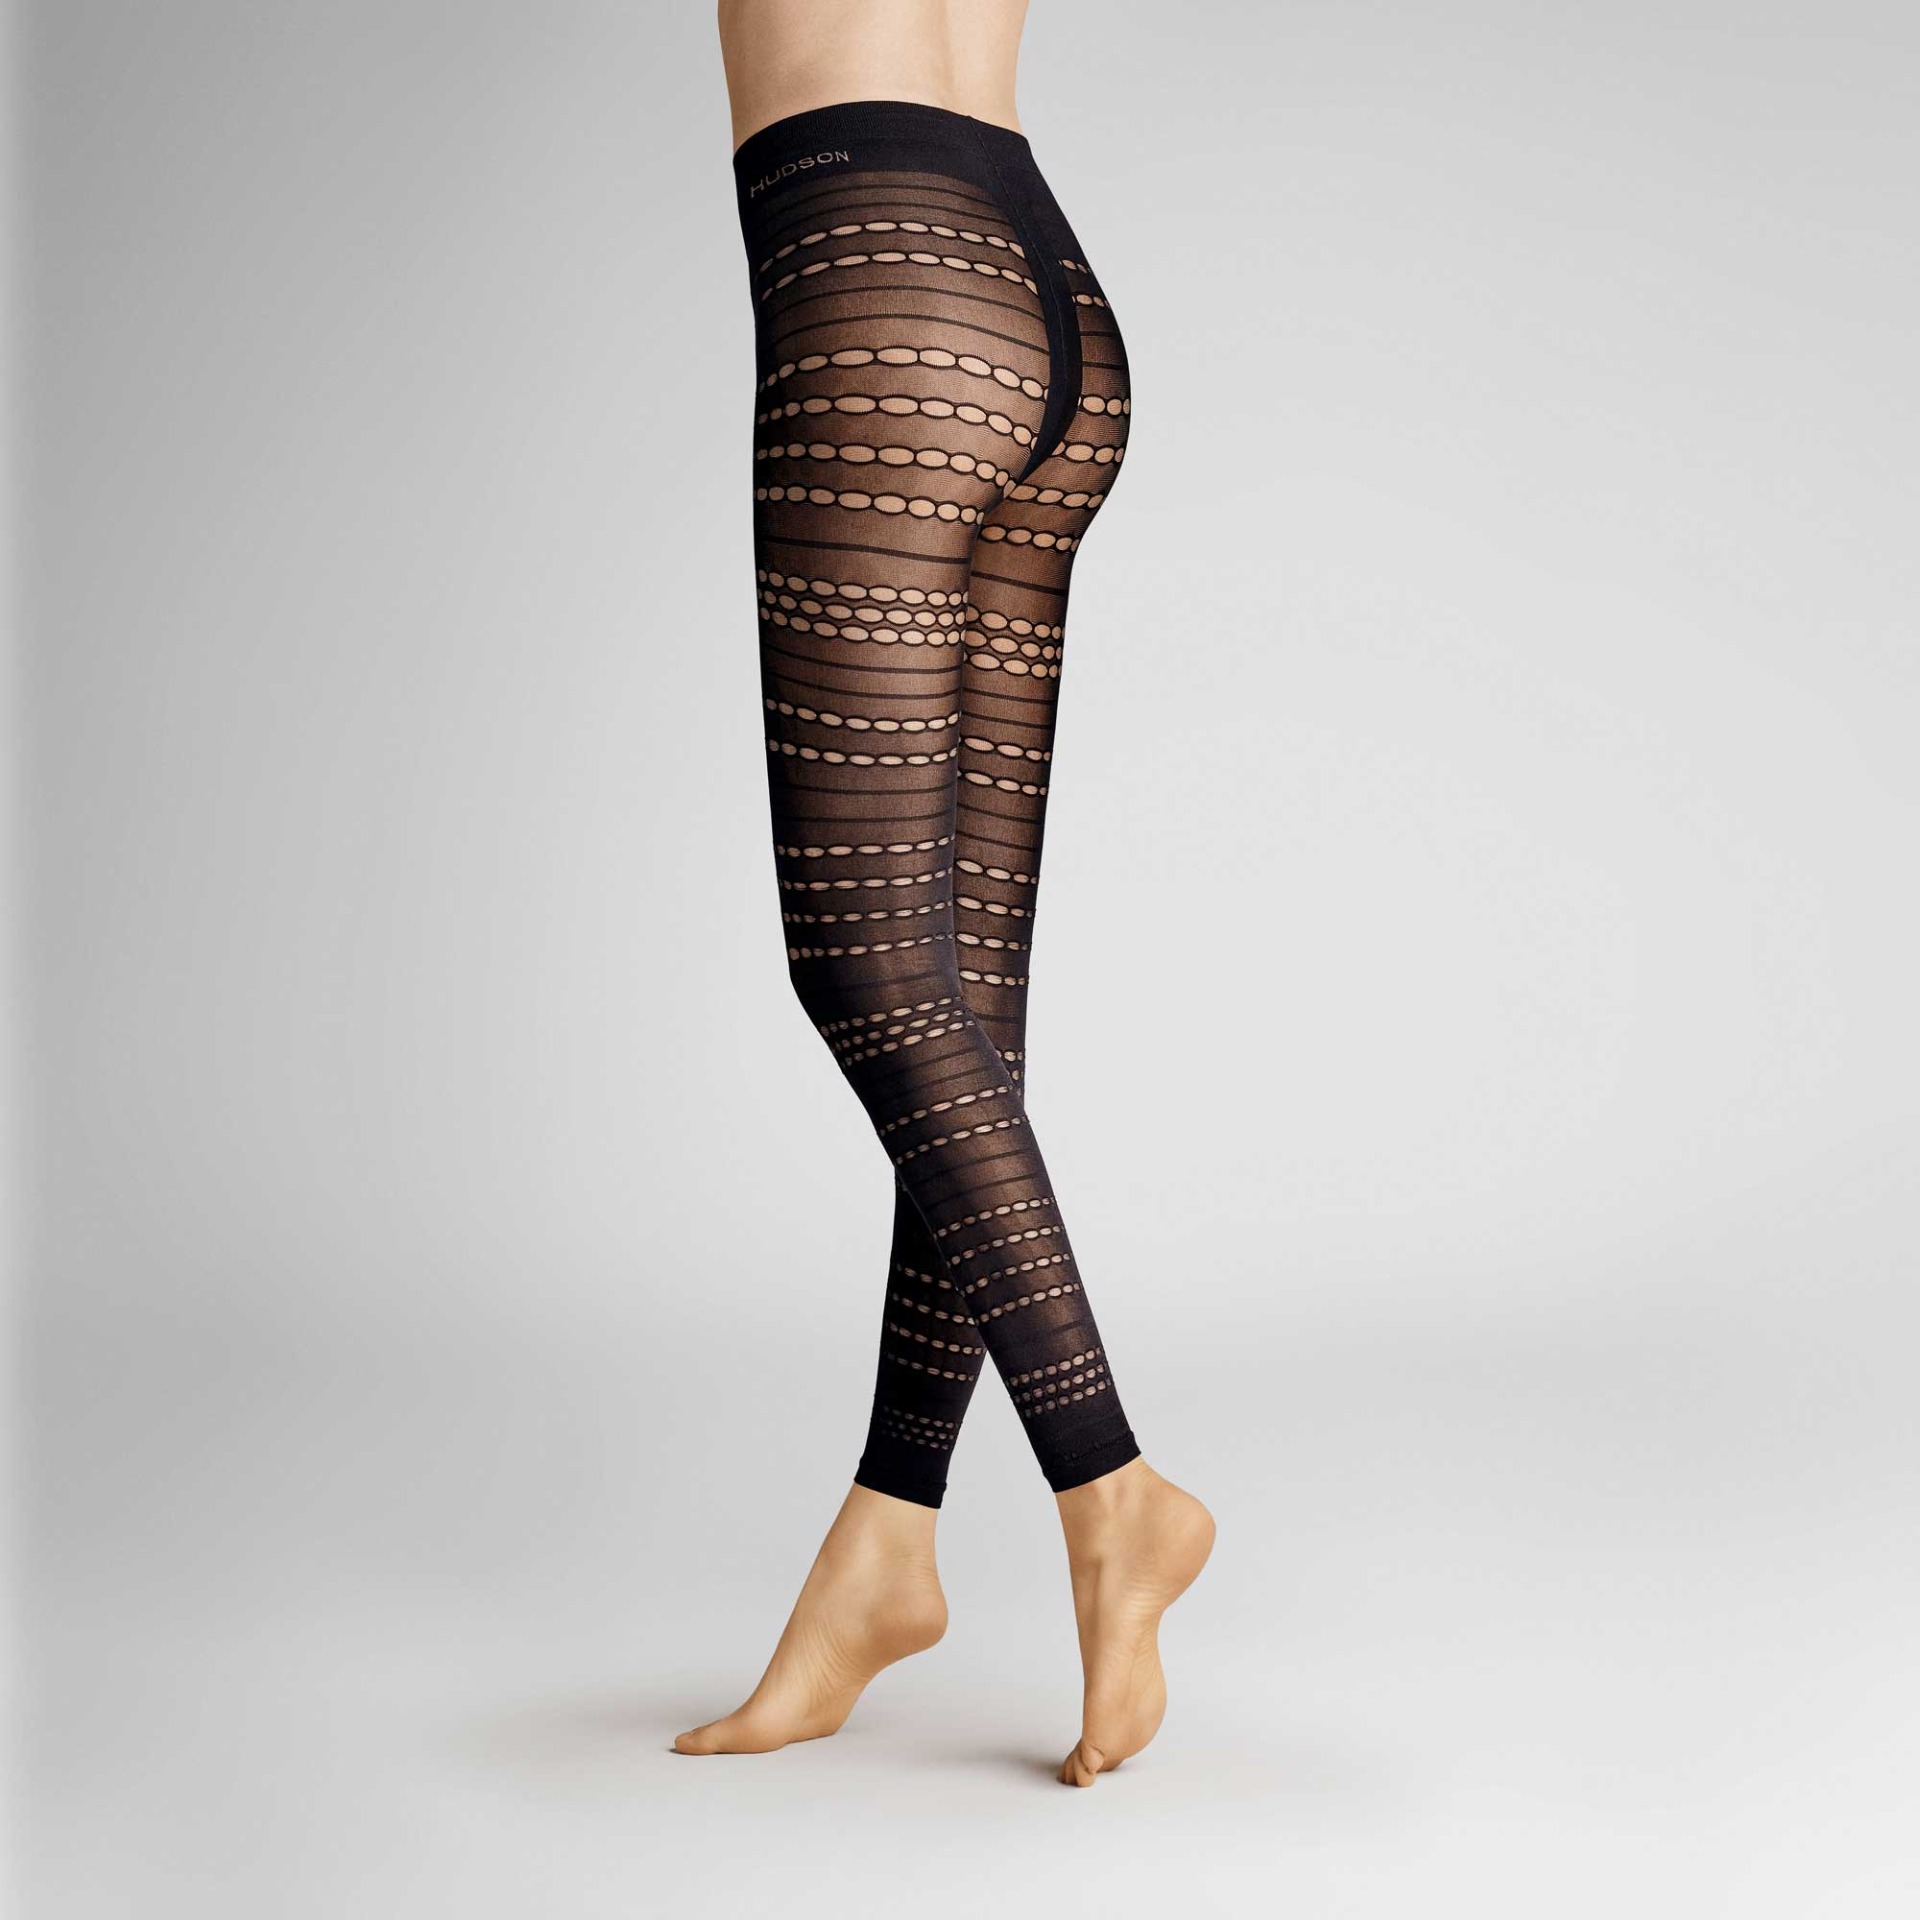 HUDSON Damen FUZZY -  38/40 - Damen Leggings mit transparenter Musterung - Black (Schwarz)